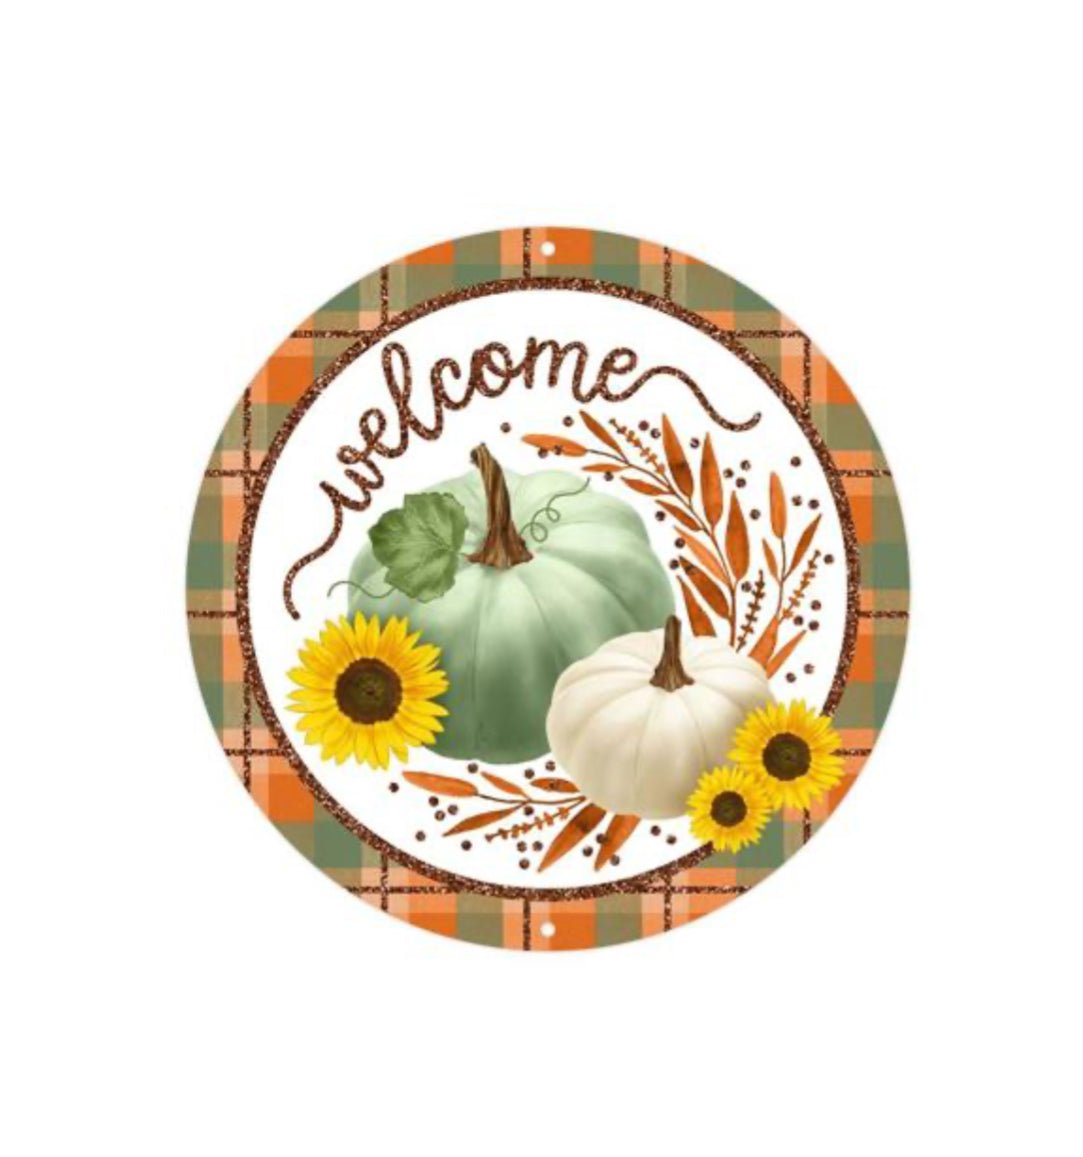 Pumpkin and sunflowers round metal sign 8” - Greenery MarketSeasonal & Holiday DecorationsMD101543